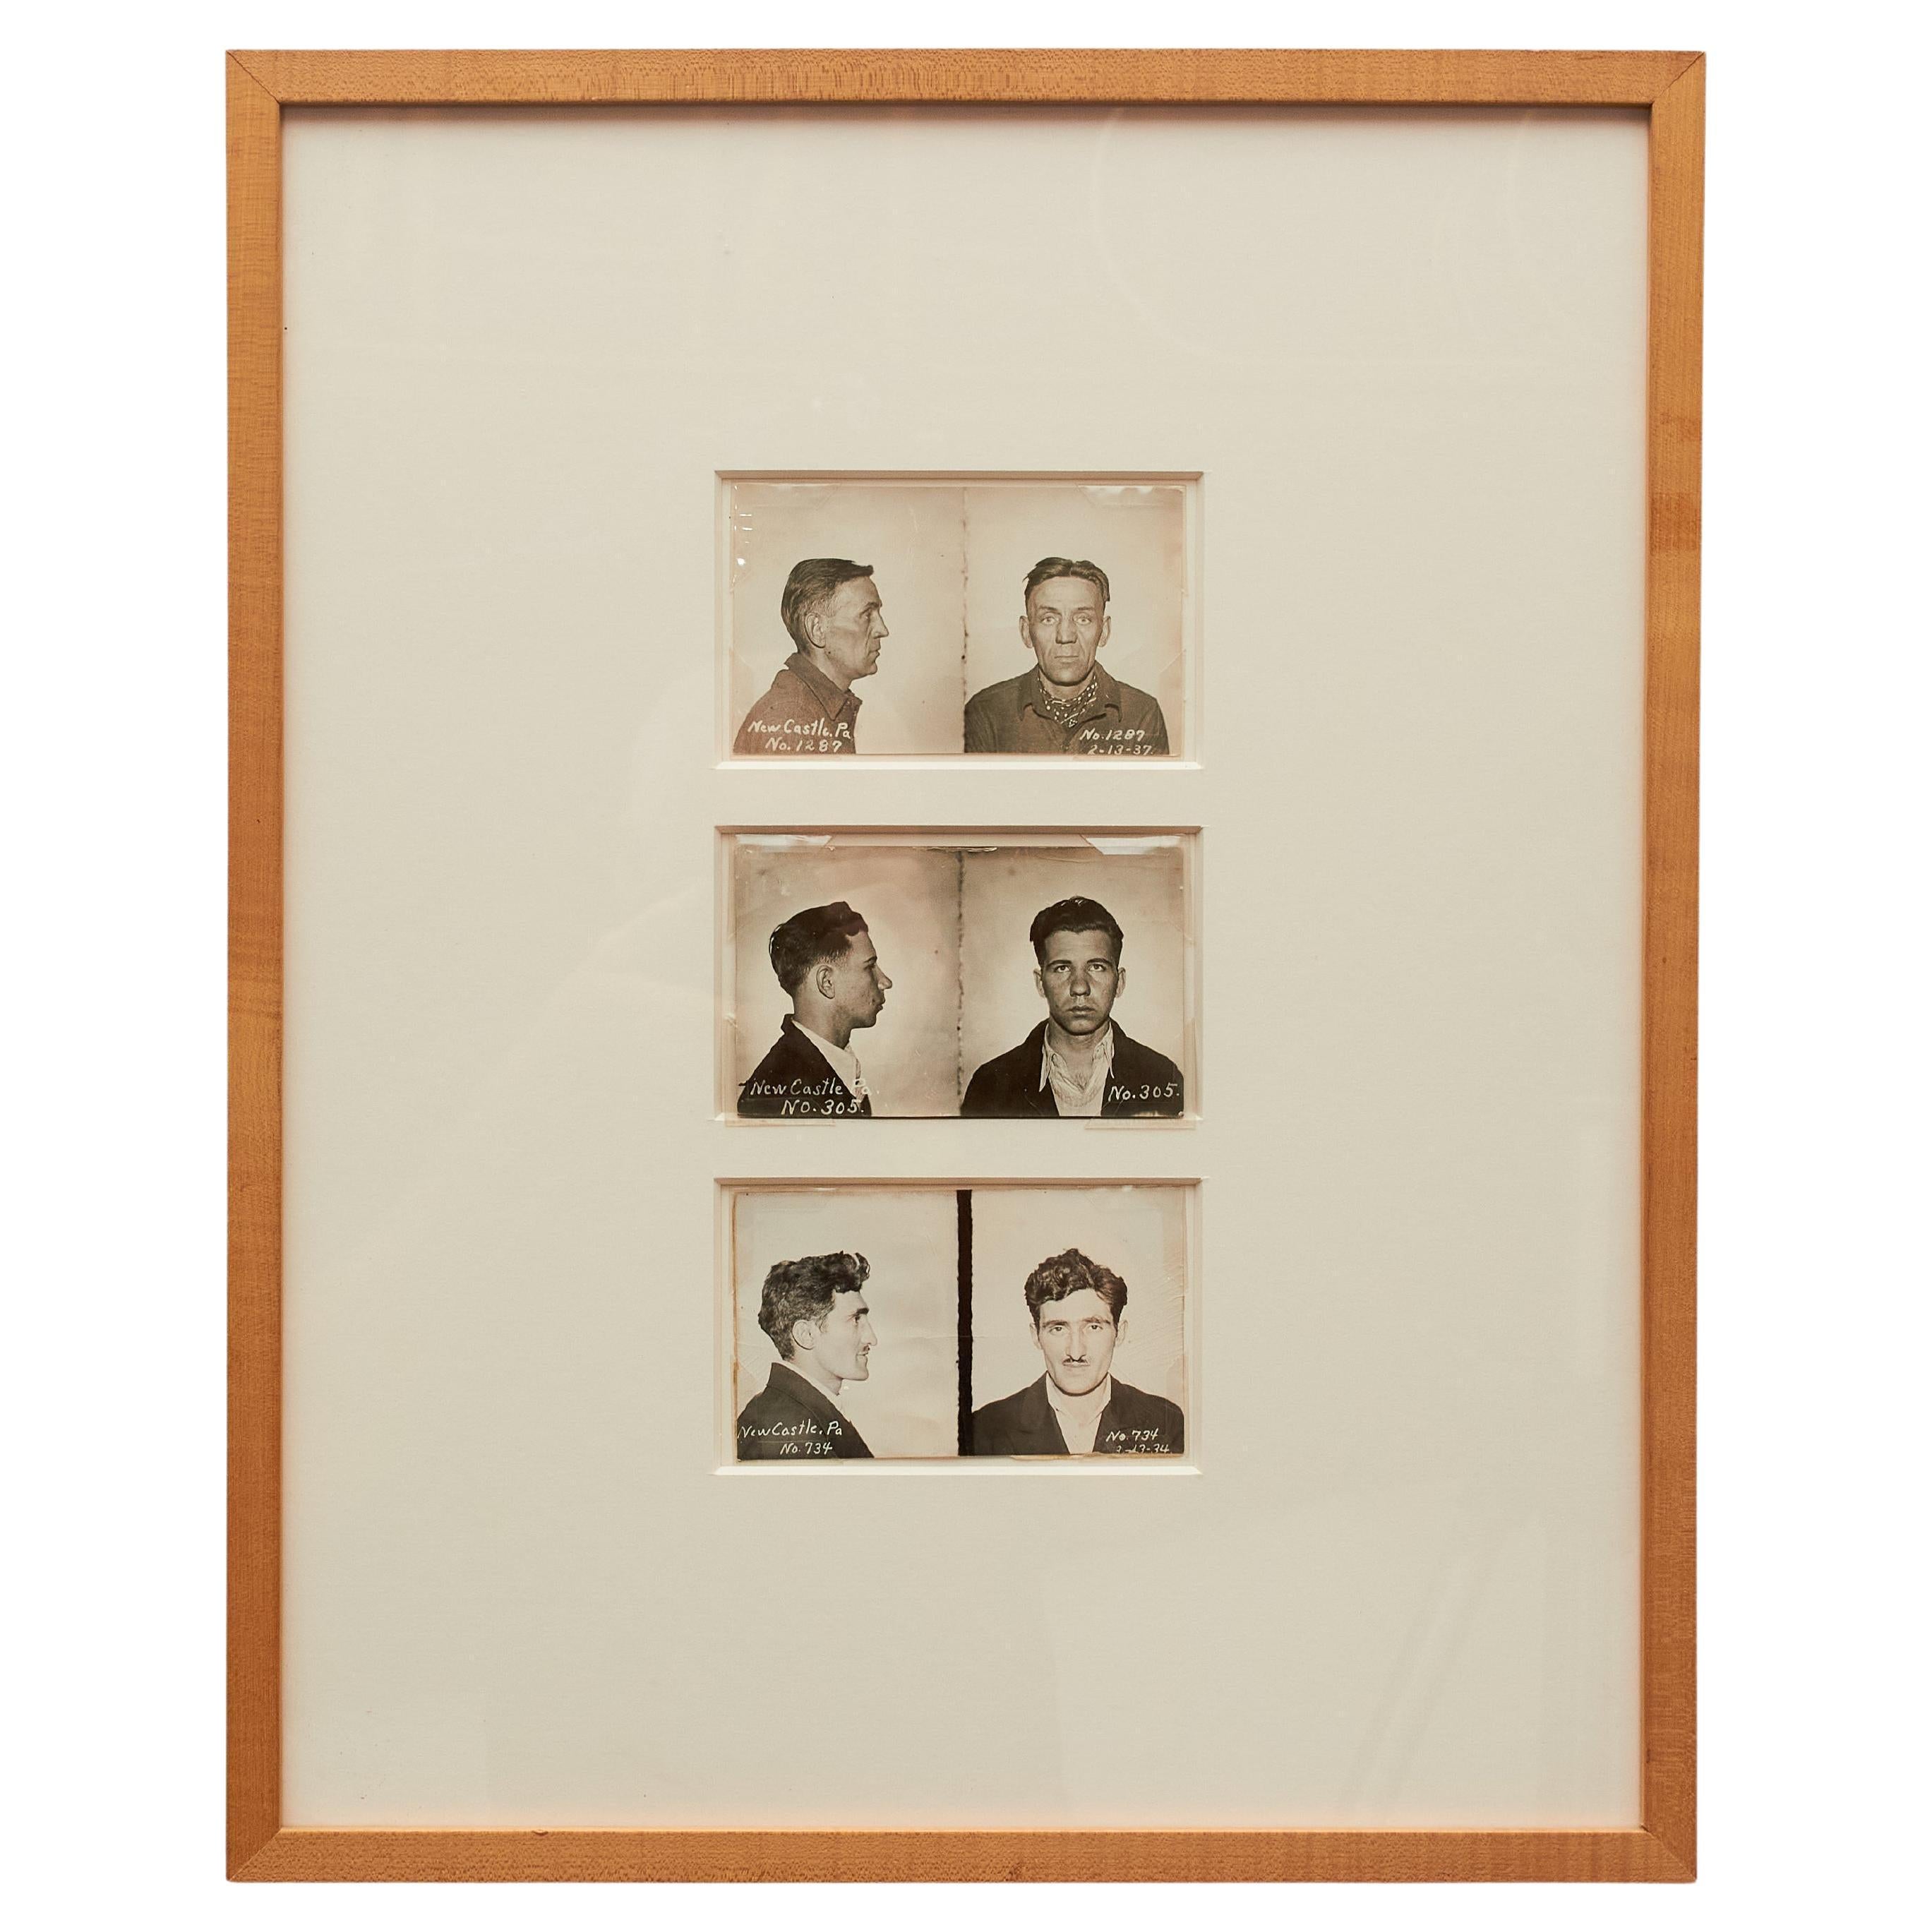 Triptych of Original 1930s Prisoner Photos Framed with Modern Elegance